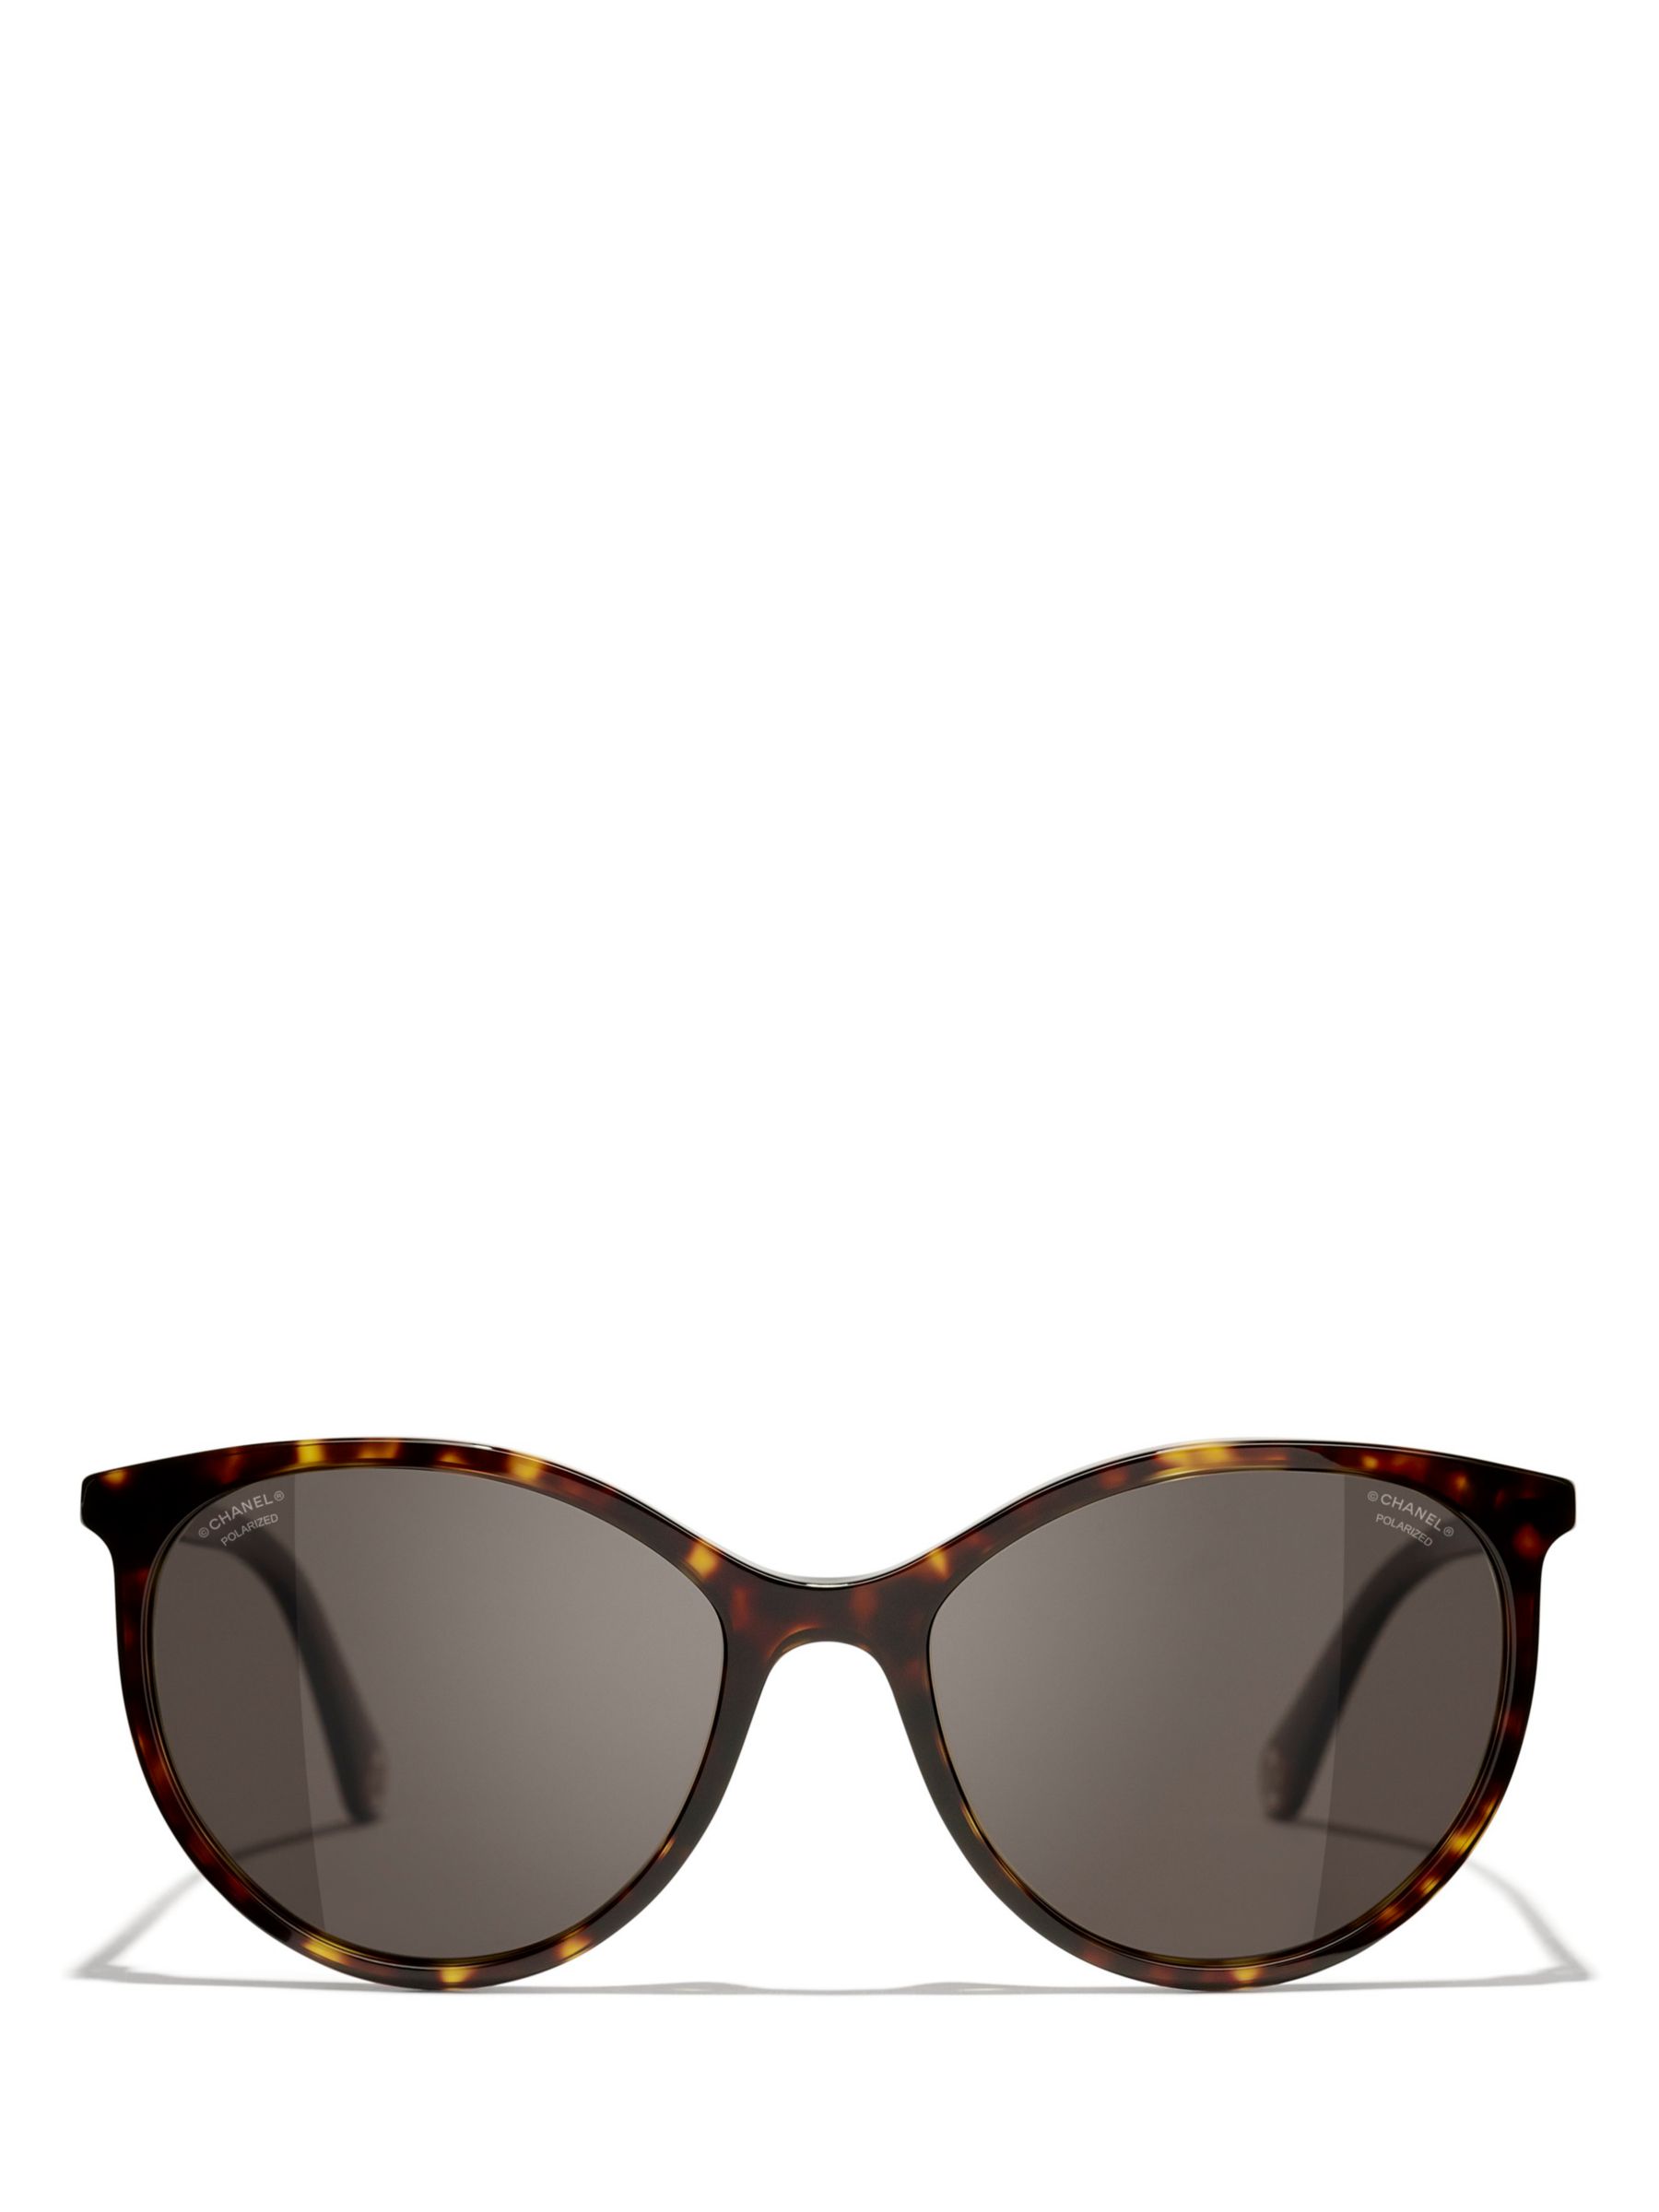 CHANEL Oval Sunglasses CH5448 Dark Havana/Brown at John Lewis & Partners